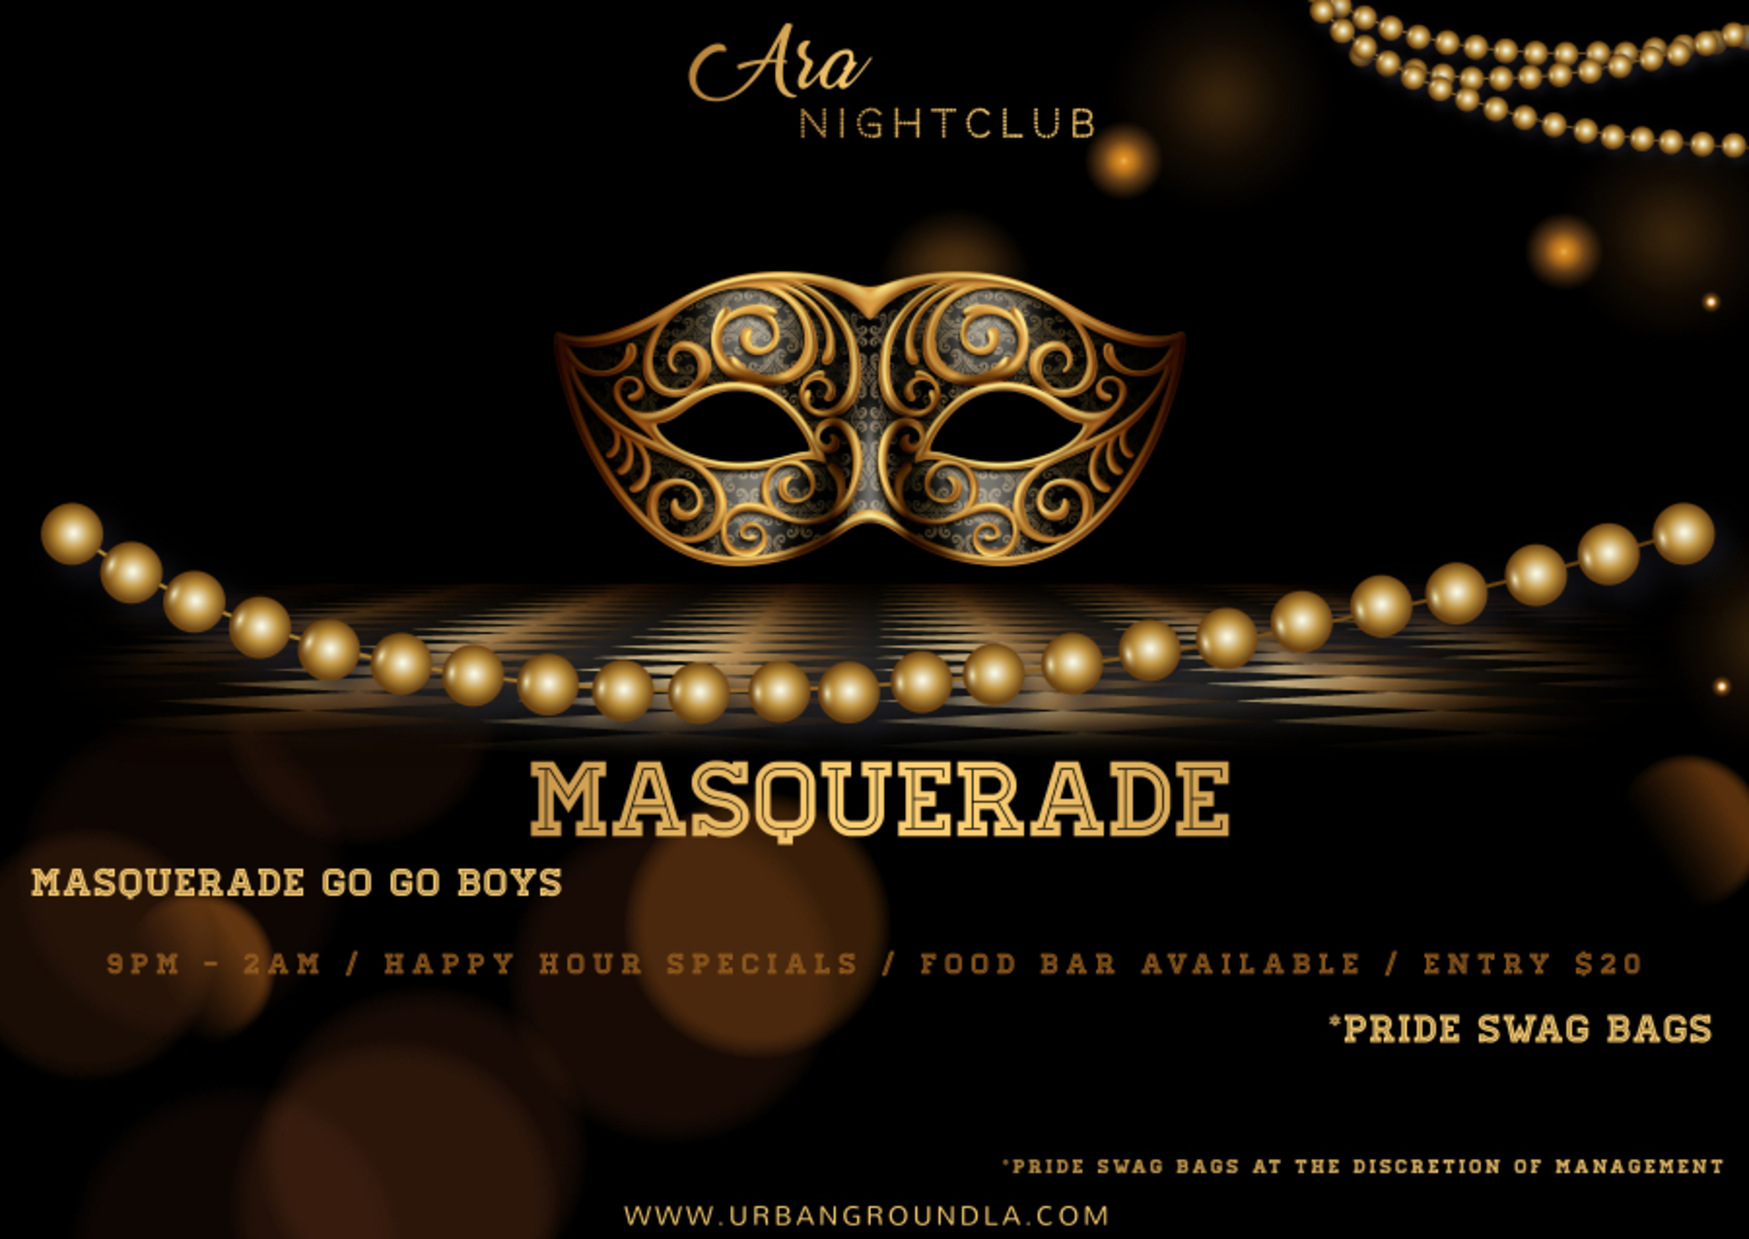 Ara Nightclub Masquerade